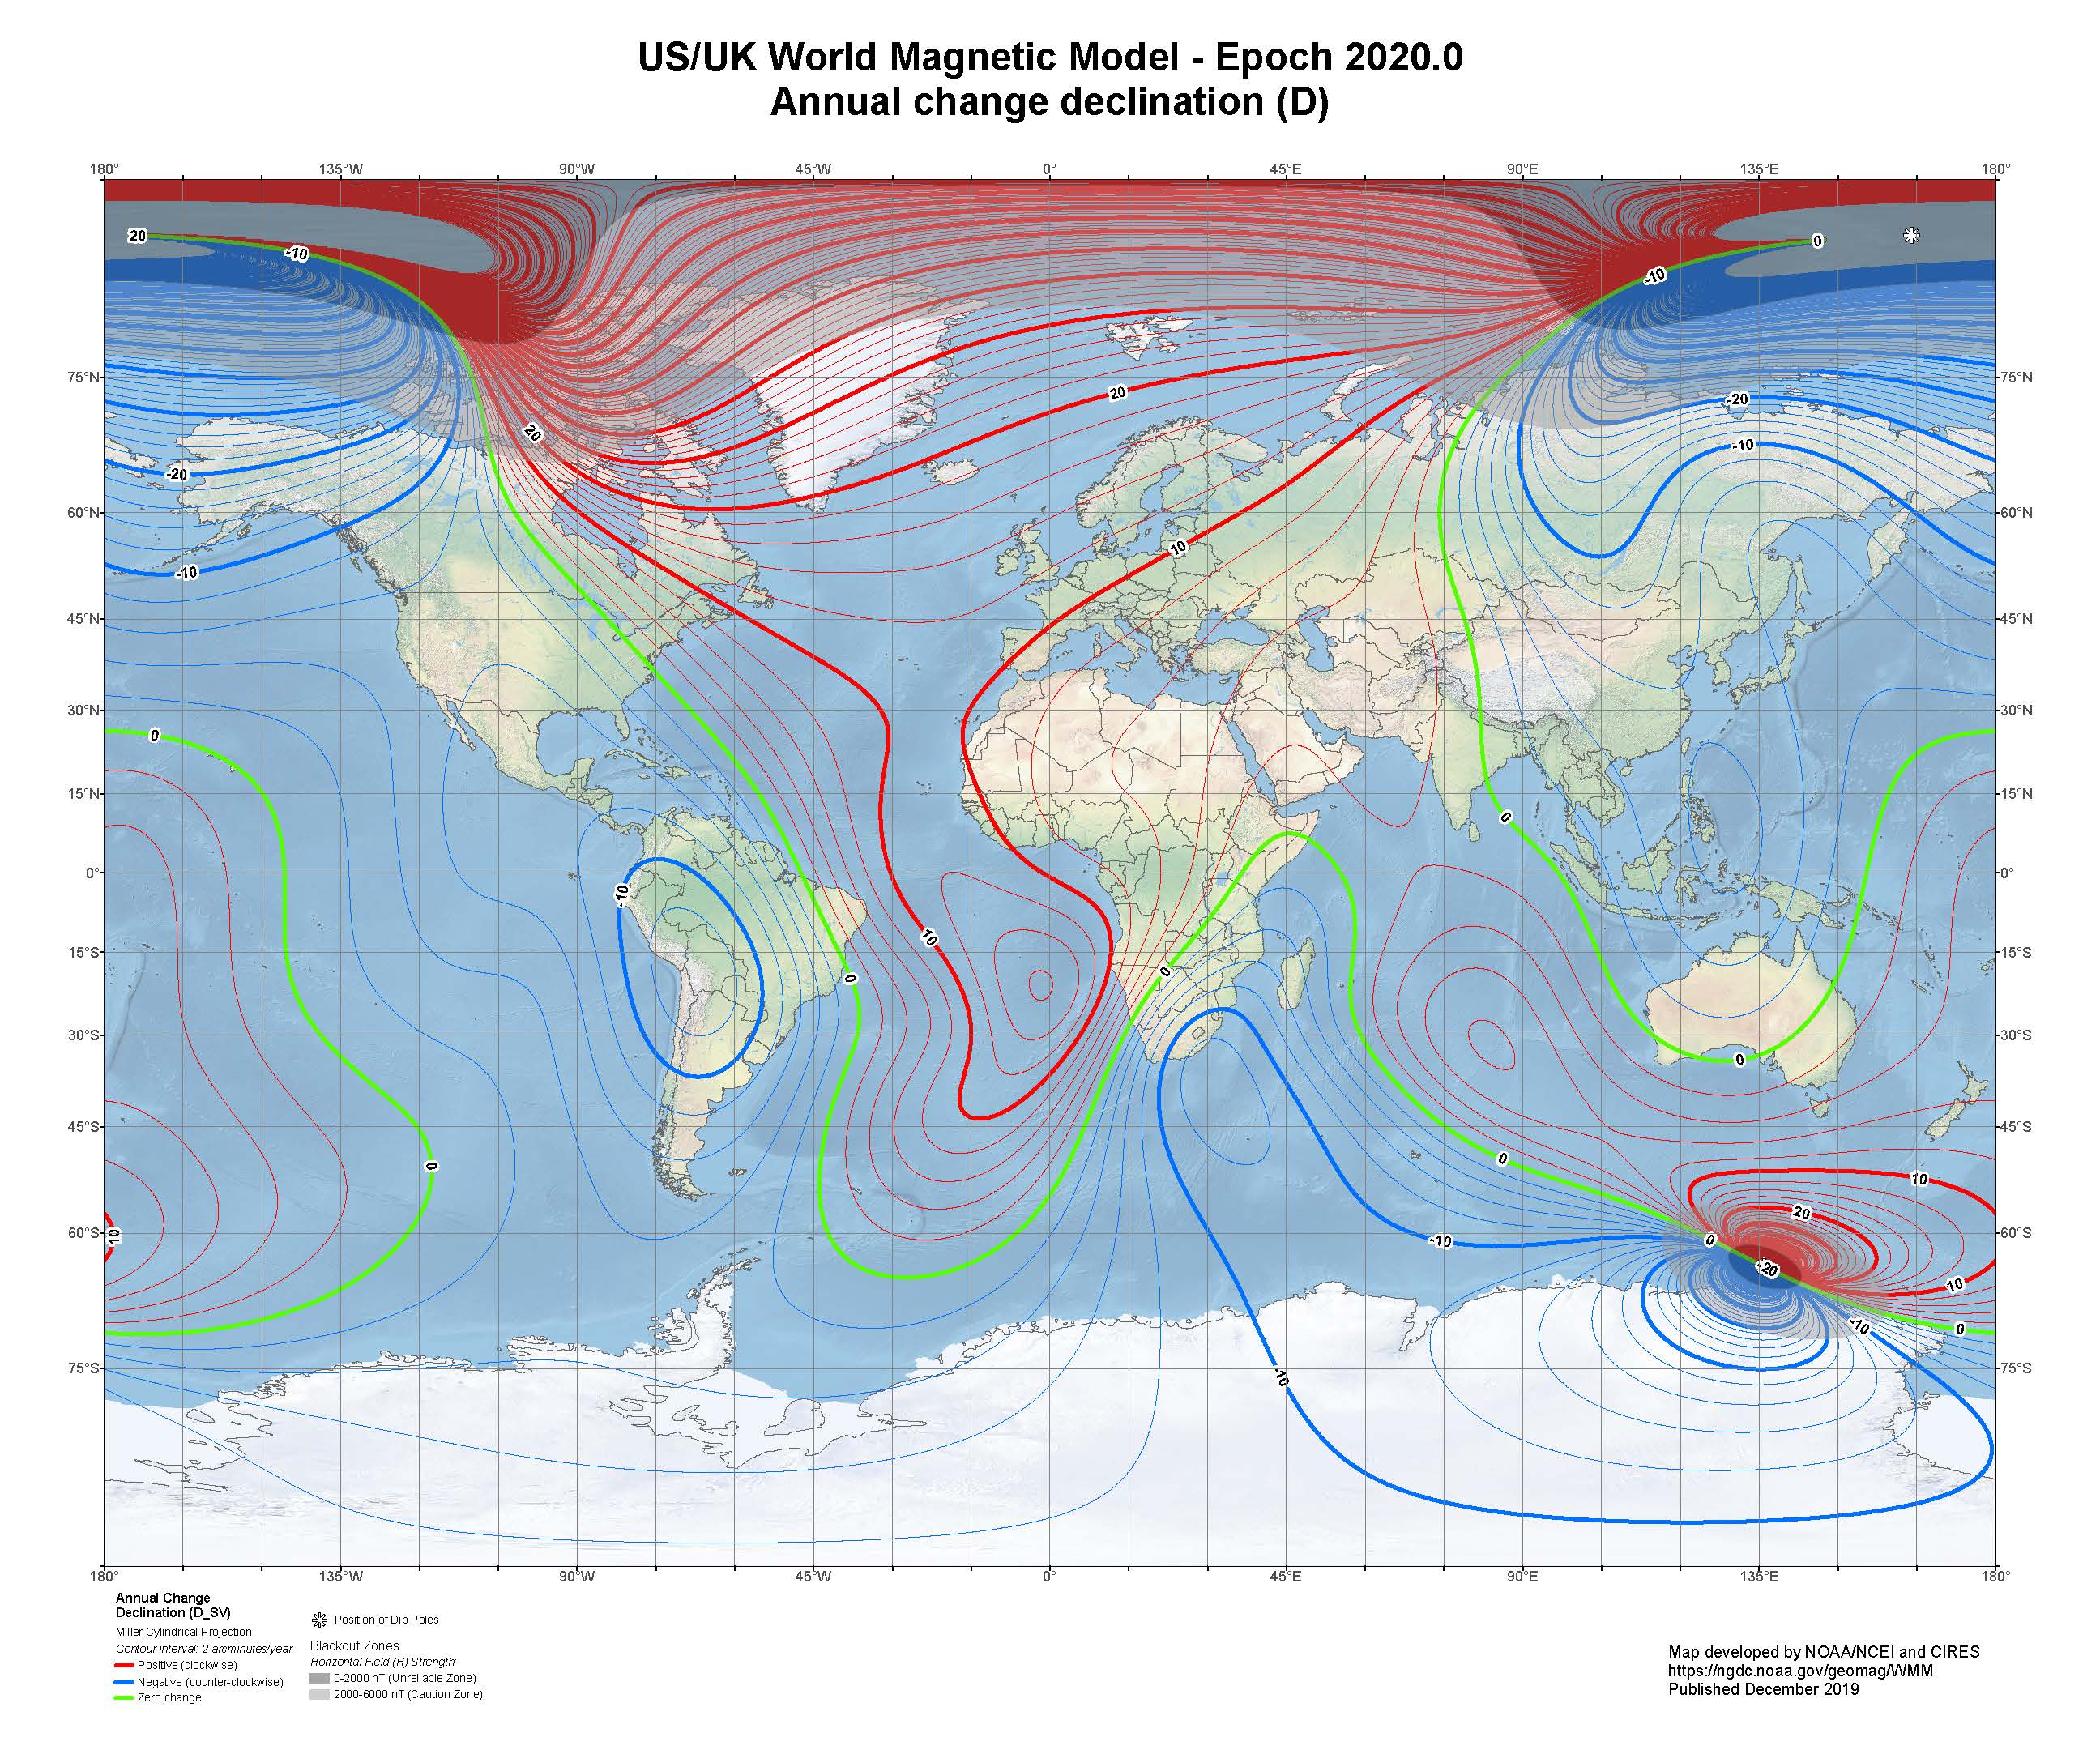 US/UK World Magnetic Model - Epoch 2020.0: Annual Change Declination